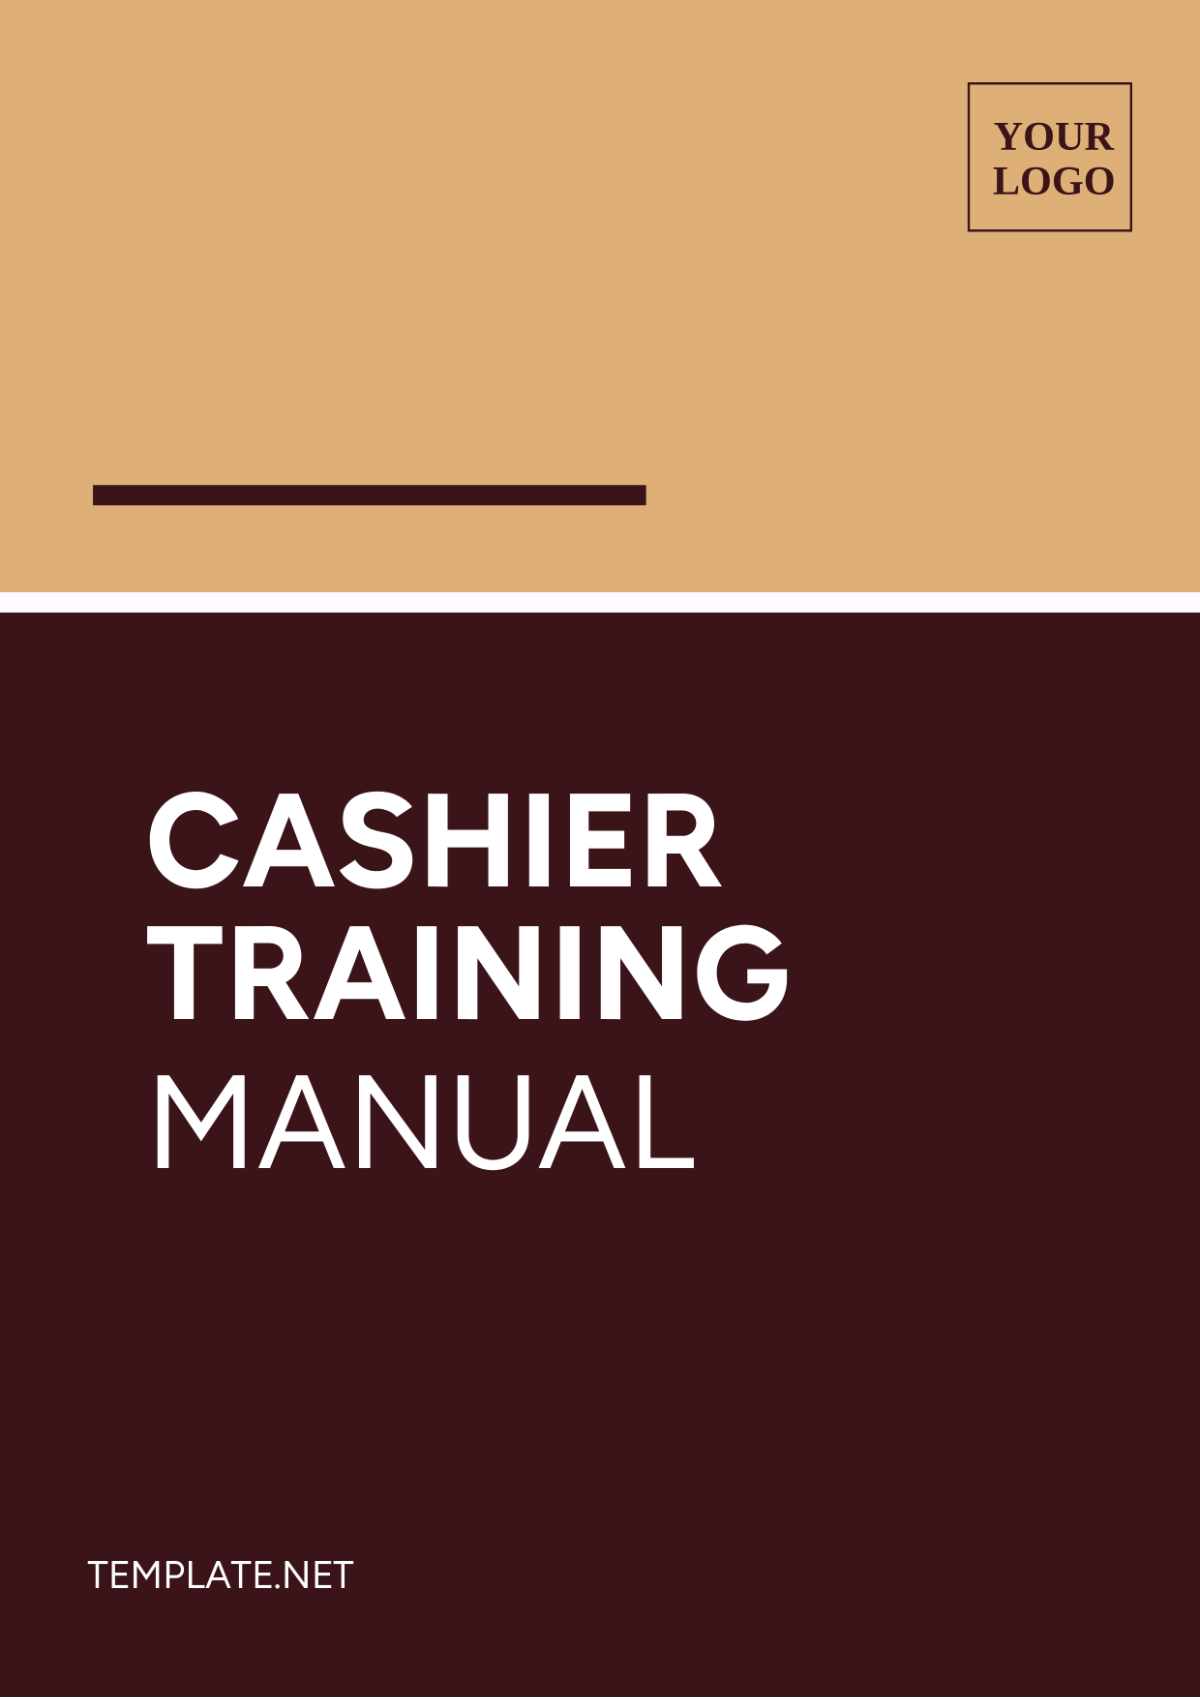 Cashier Training Manual Template